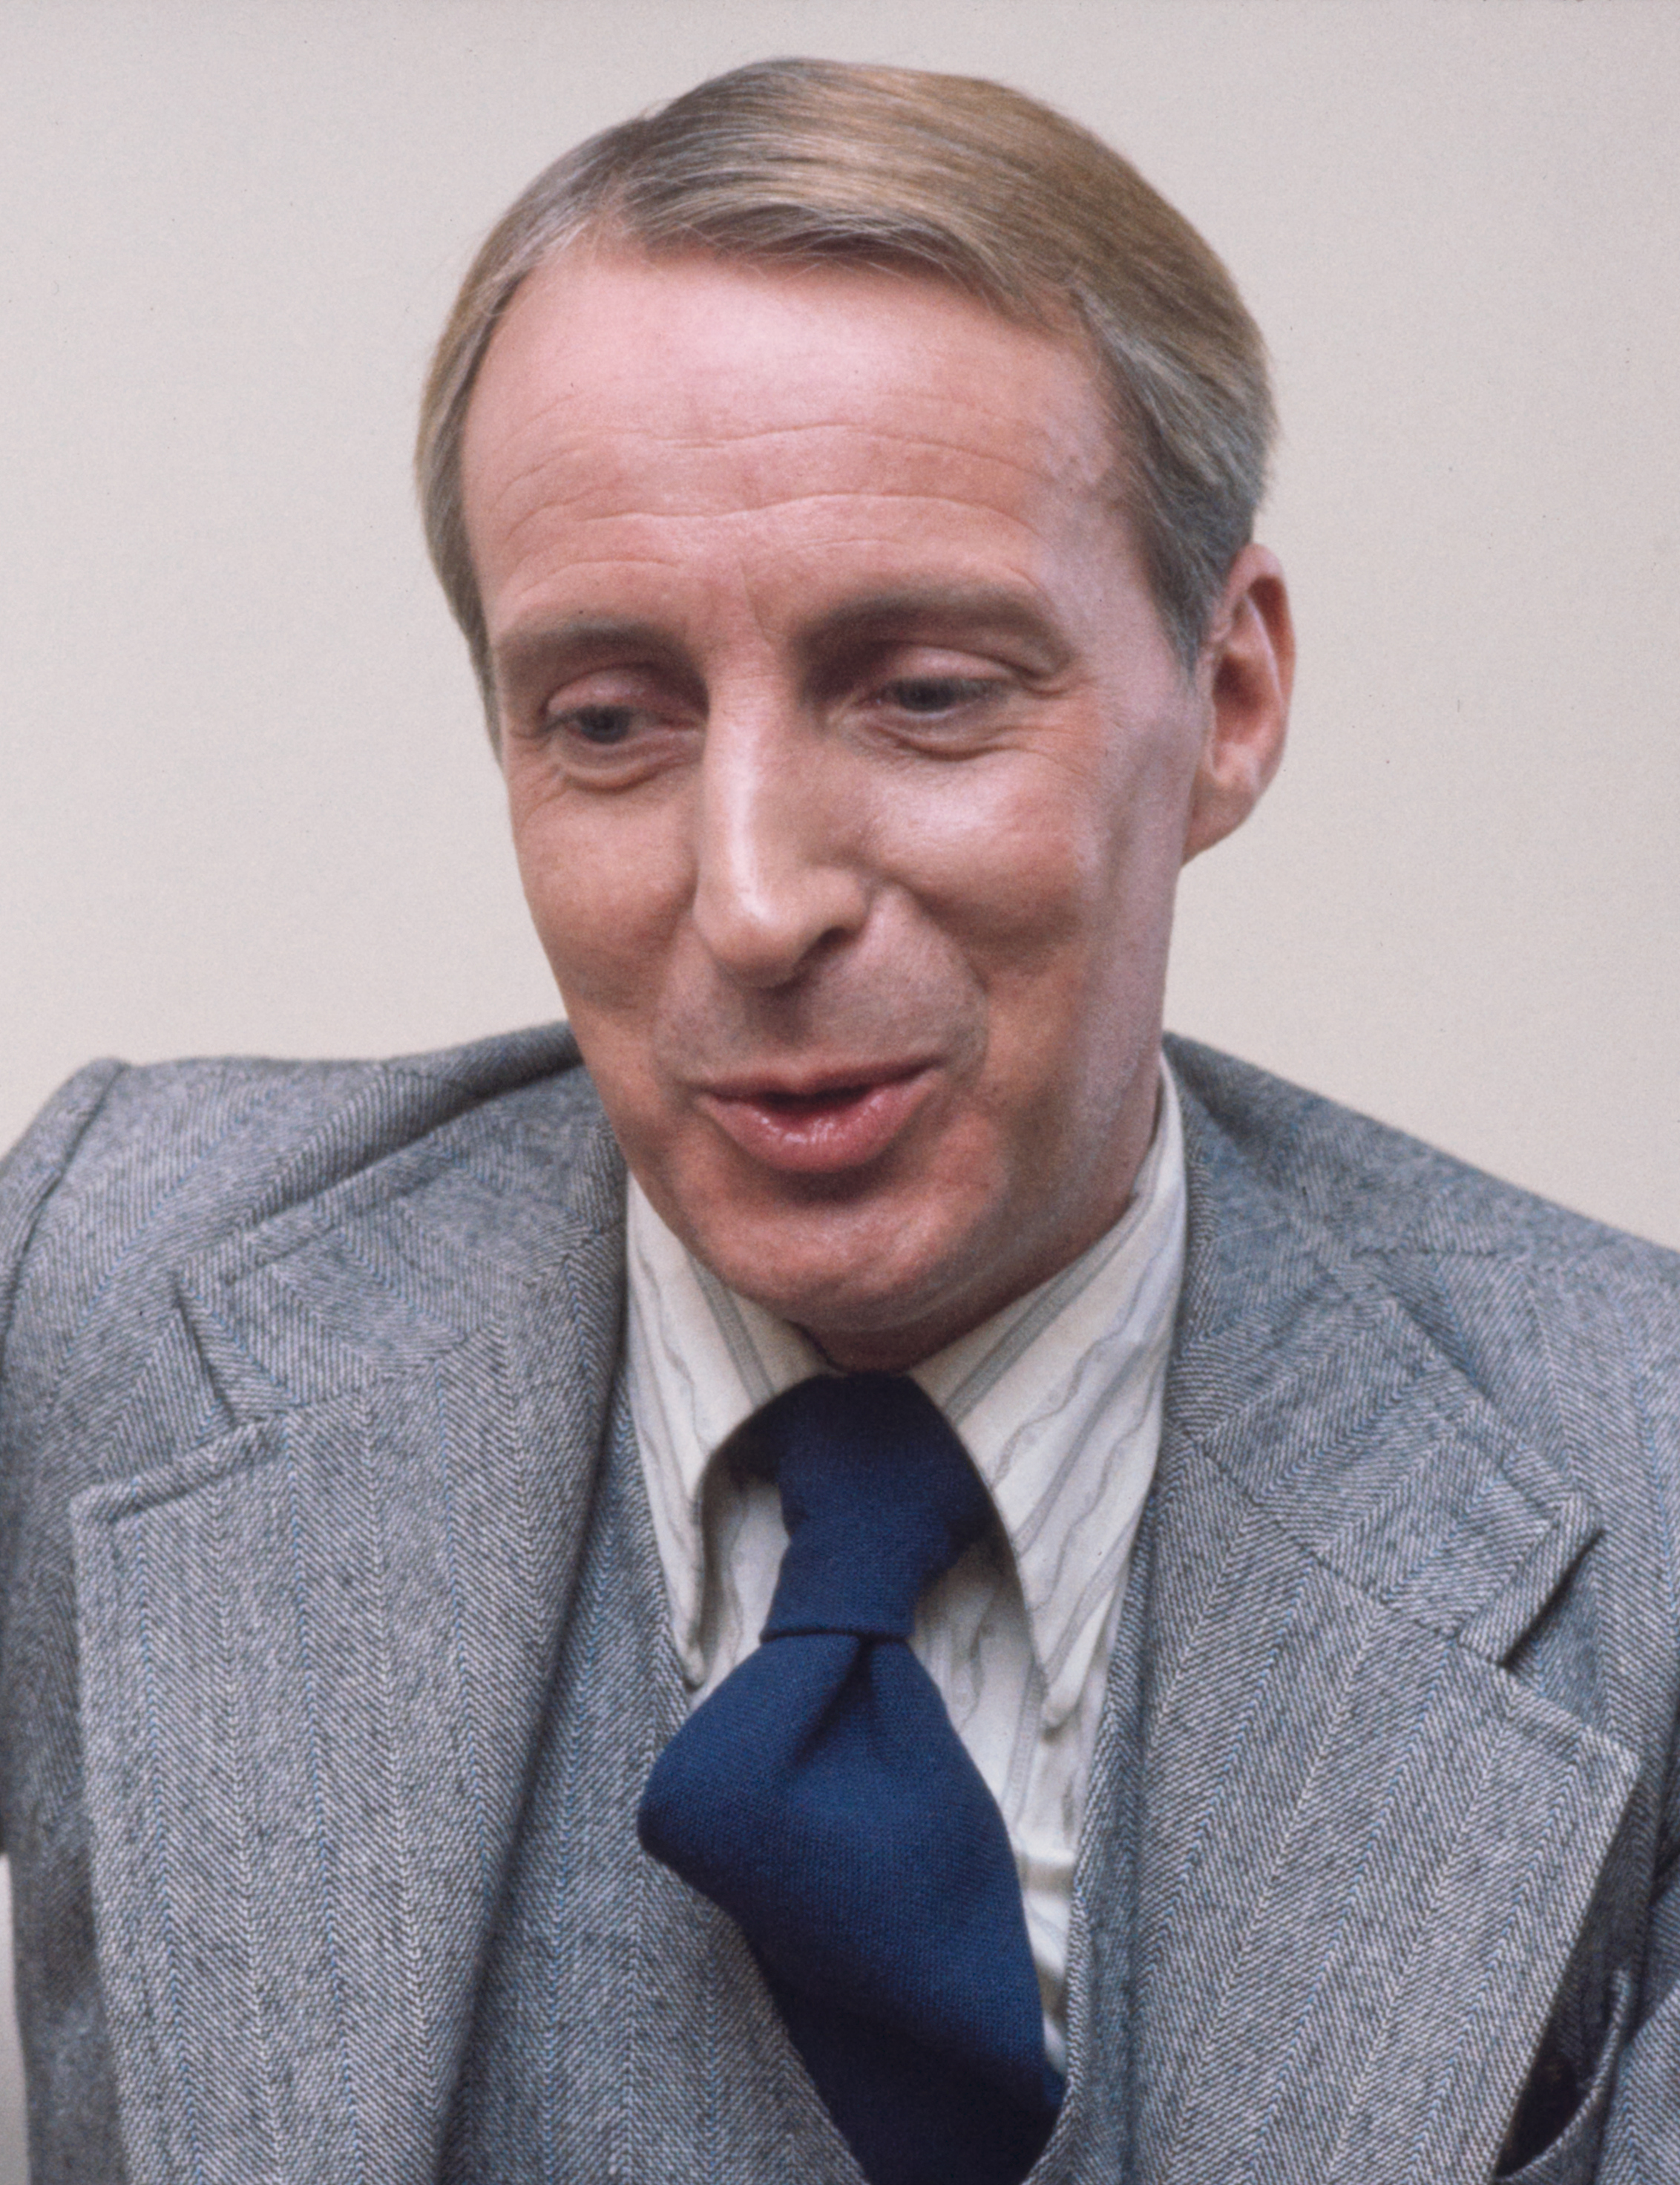 Richardson circa 1976